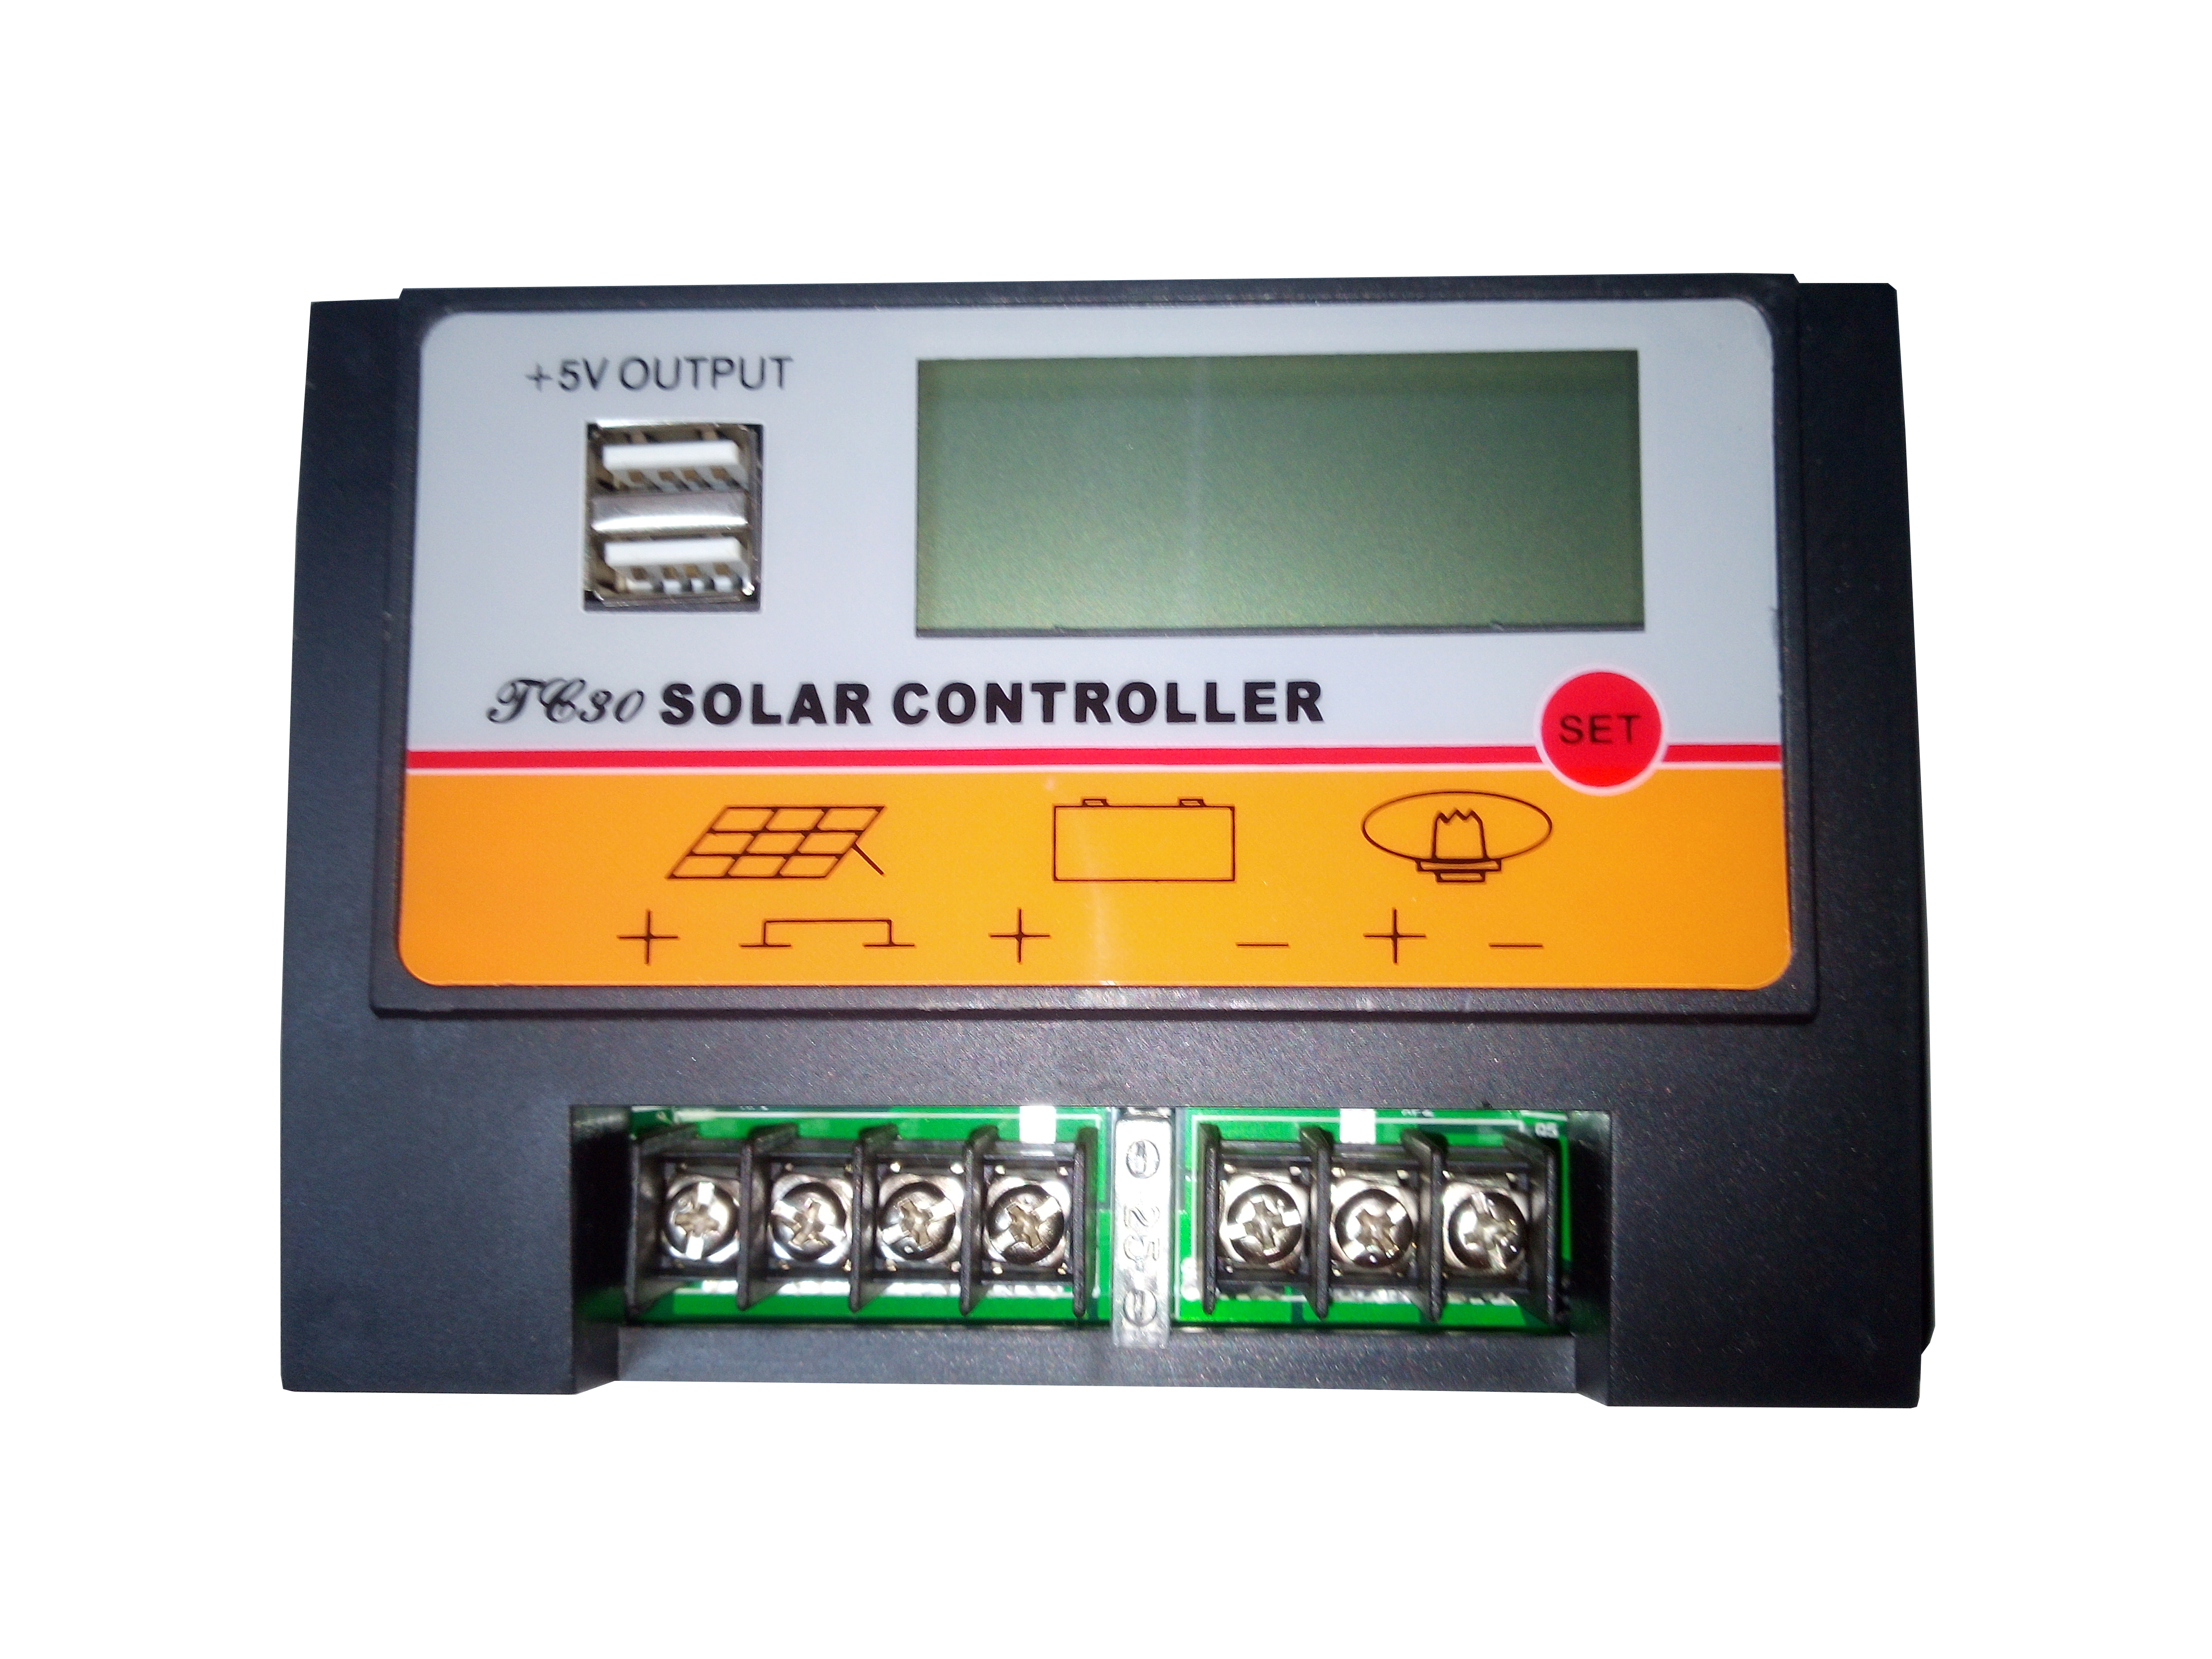 Controller solar jarrett incarcare baterie , 20 a , display grafic lcd , tensiune de incarcare 13,8 v/24,6 v , tensiunea joasa de protectie 10,7 v/21,4 v